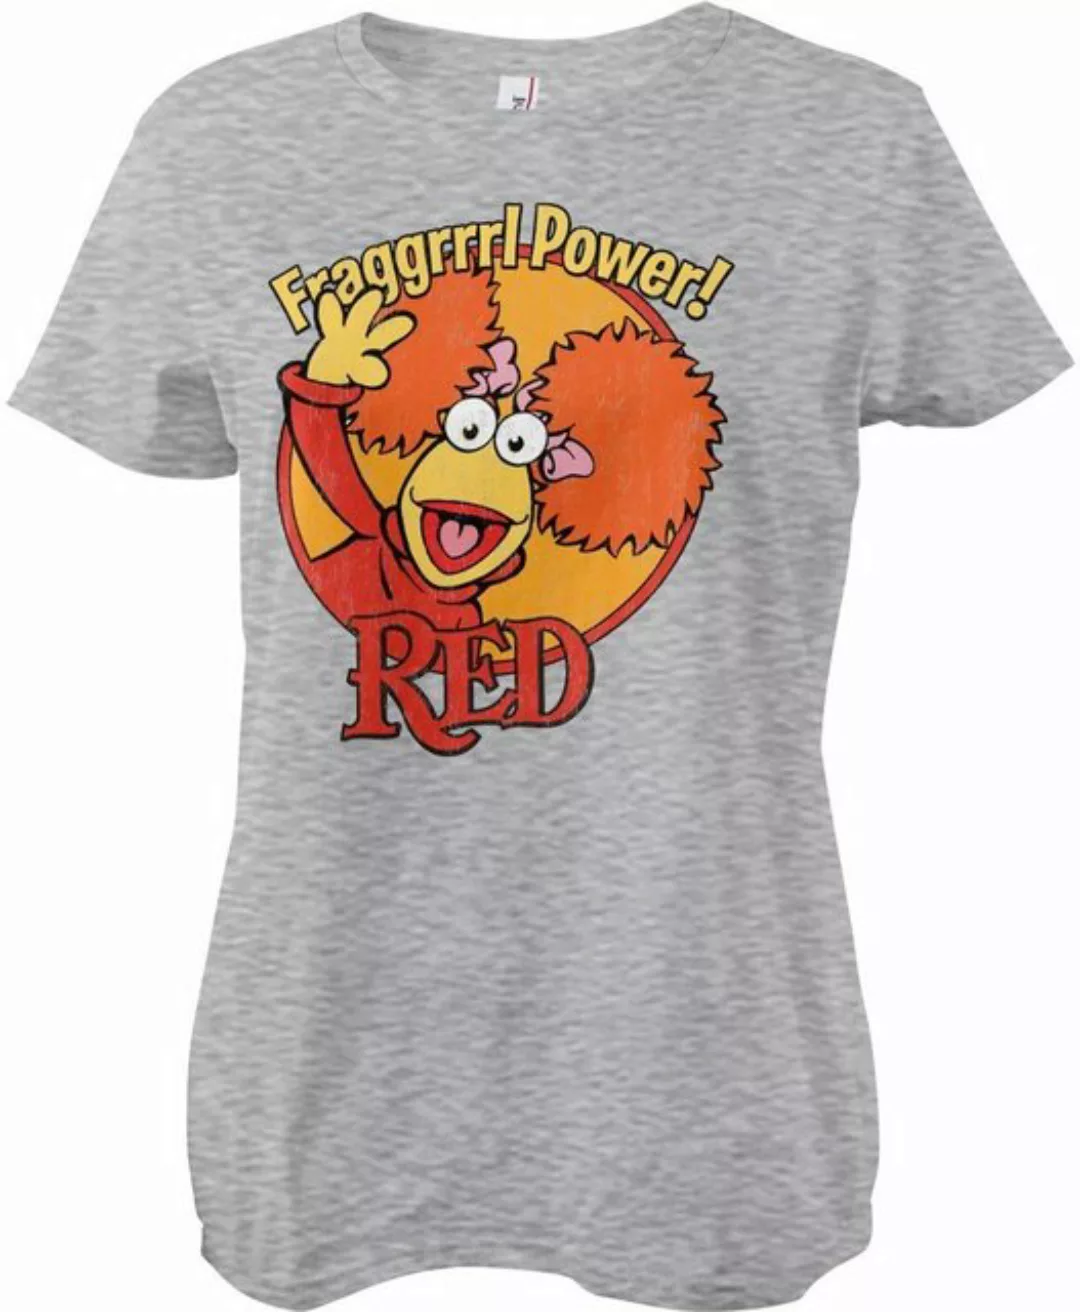 Fraggle Rock T-Shirt Red Fragggrrrl Power Girly Tee günstig online kaufen